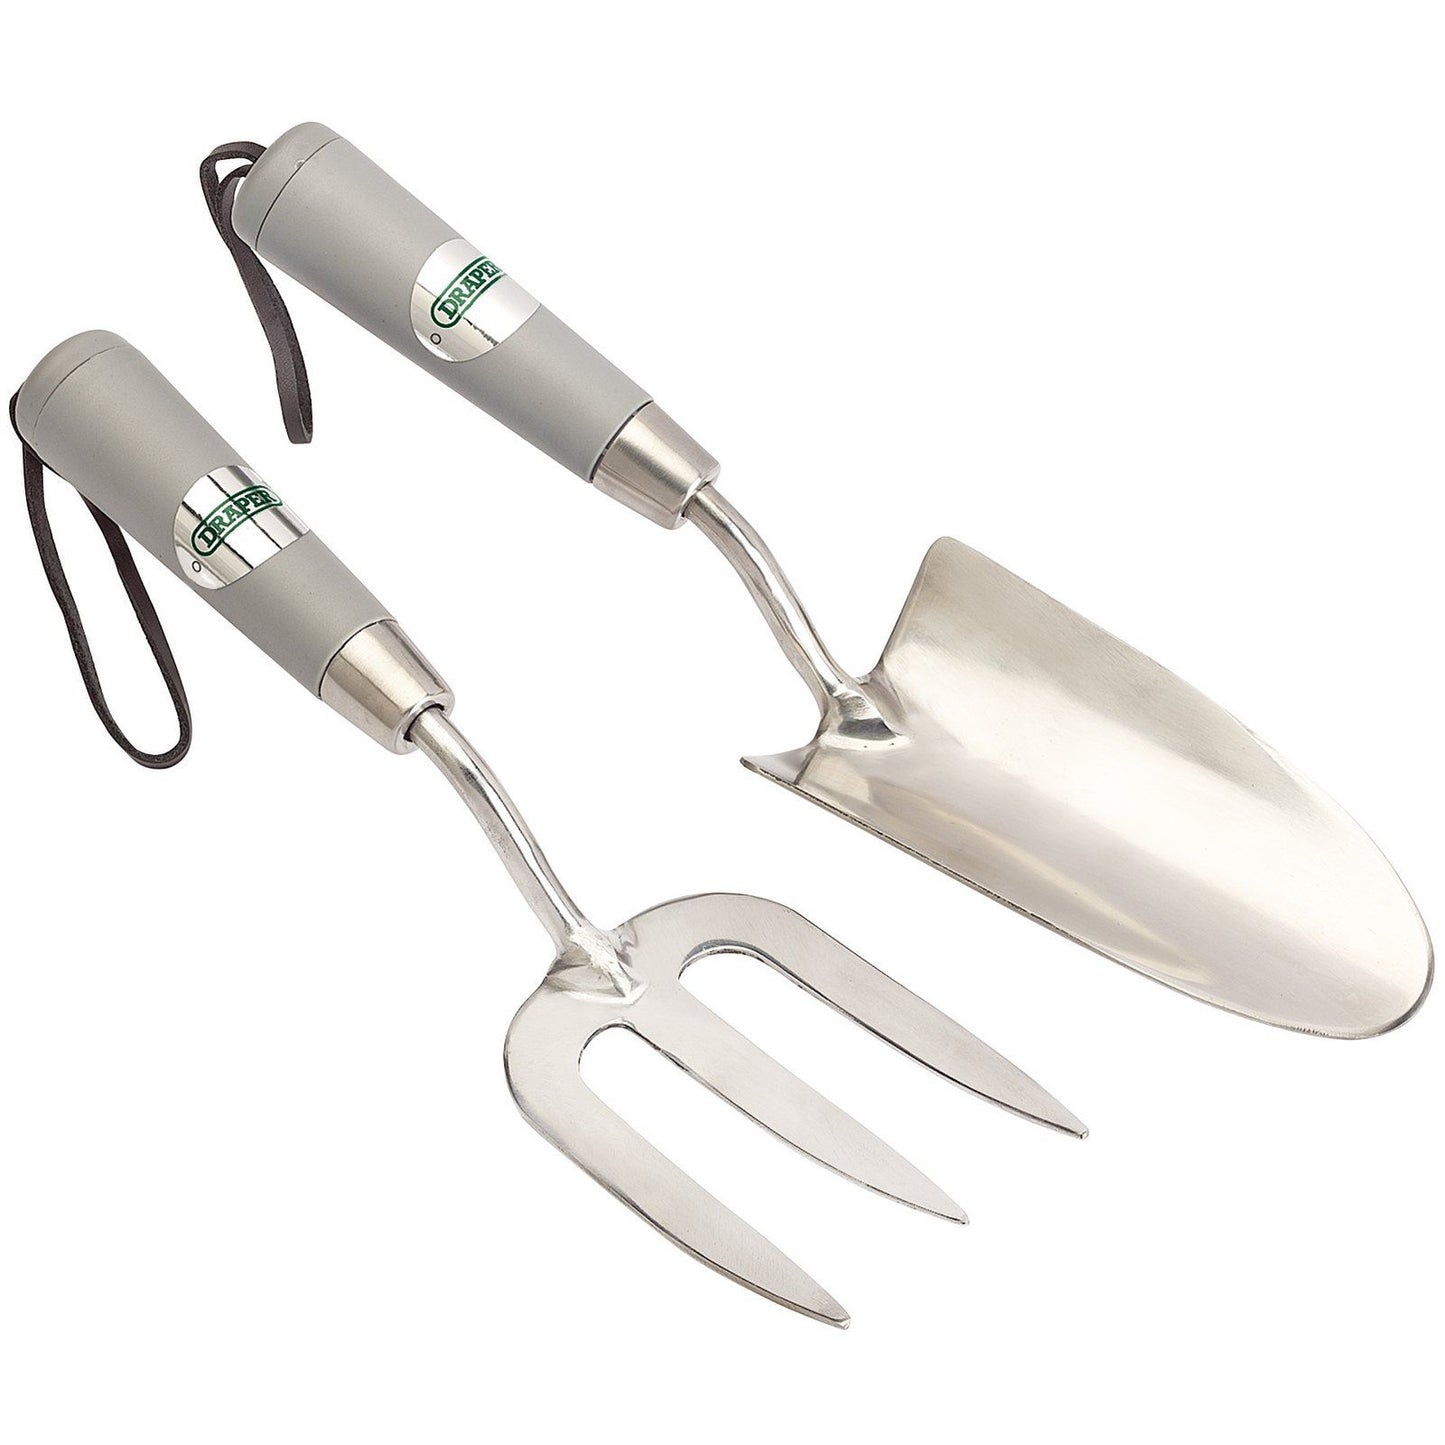 Draper Stainless Steel Weeding Fork and Trowel Gift Set Gardening Hand Tools - 83773